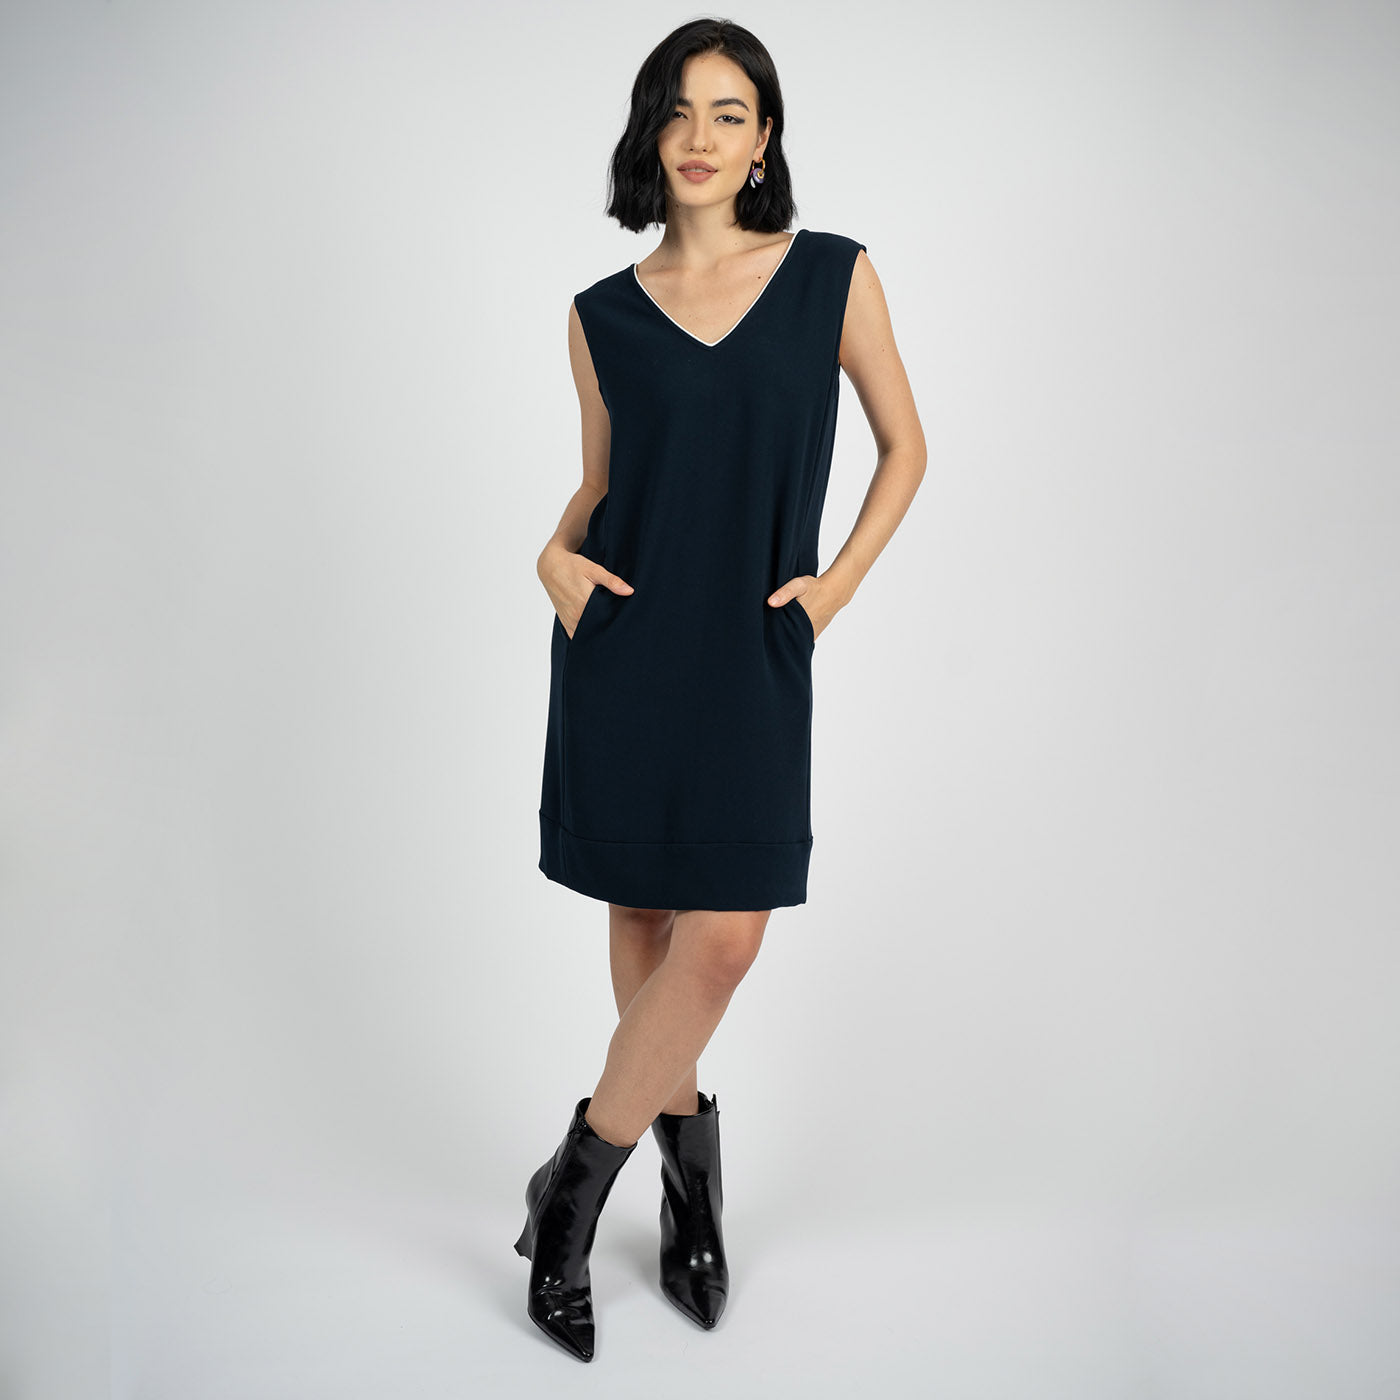 Shop Lauren Acetate Sleeveless Mini Dress Online